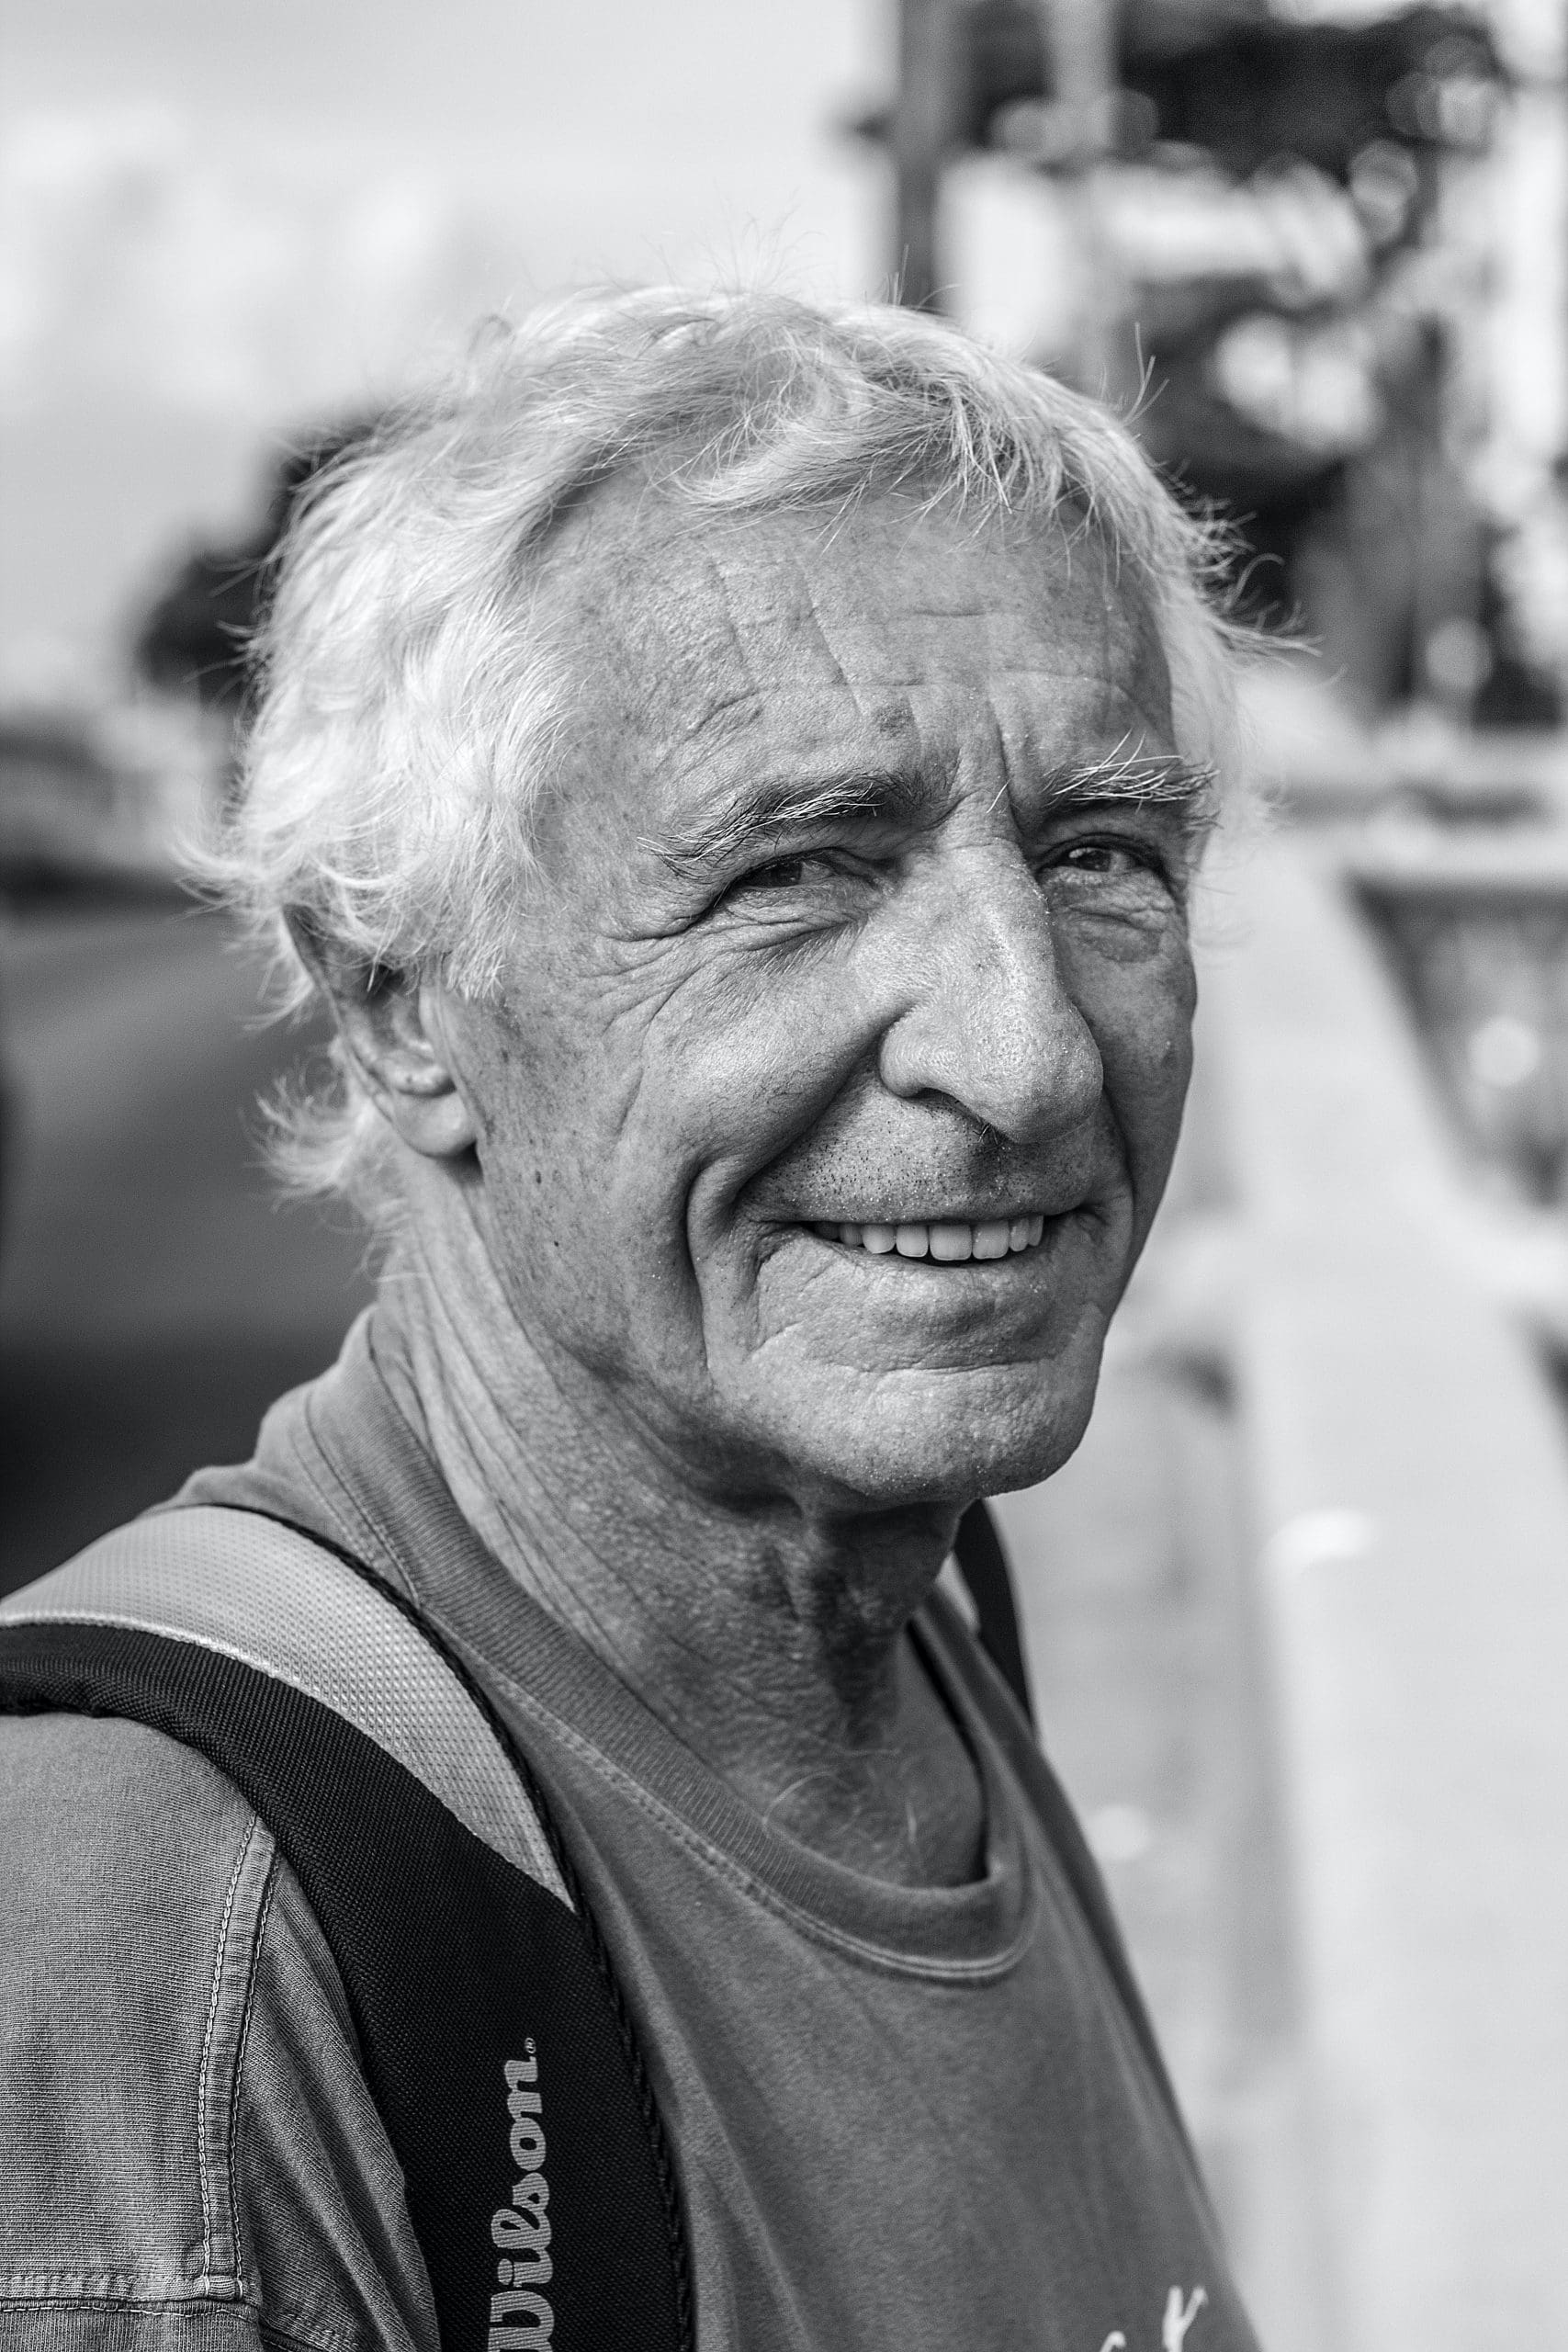 Older man outside smilingg to camera